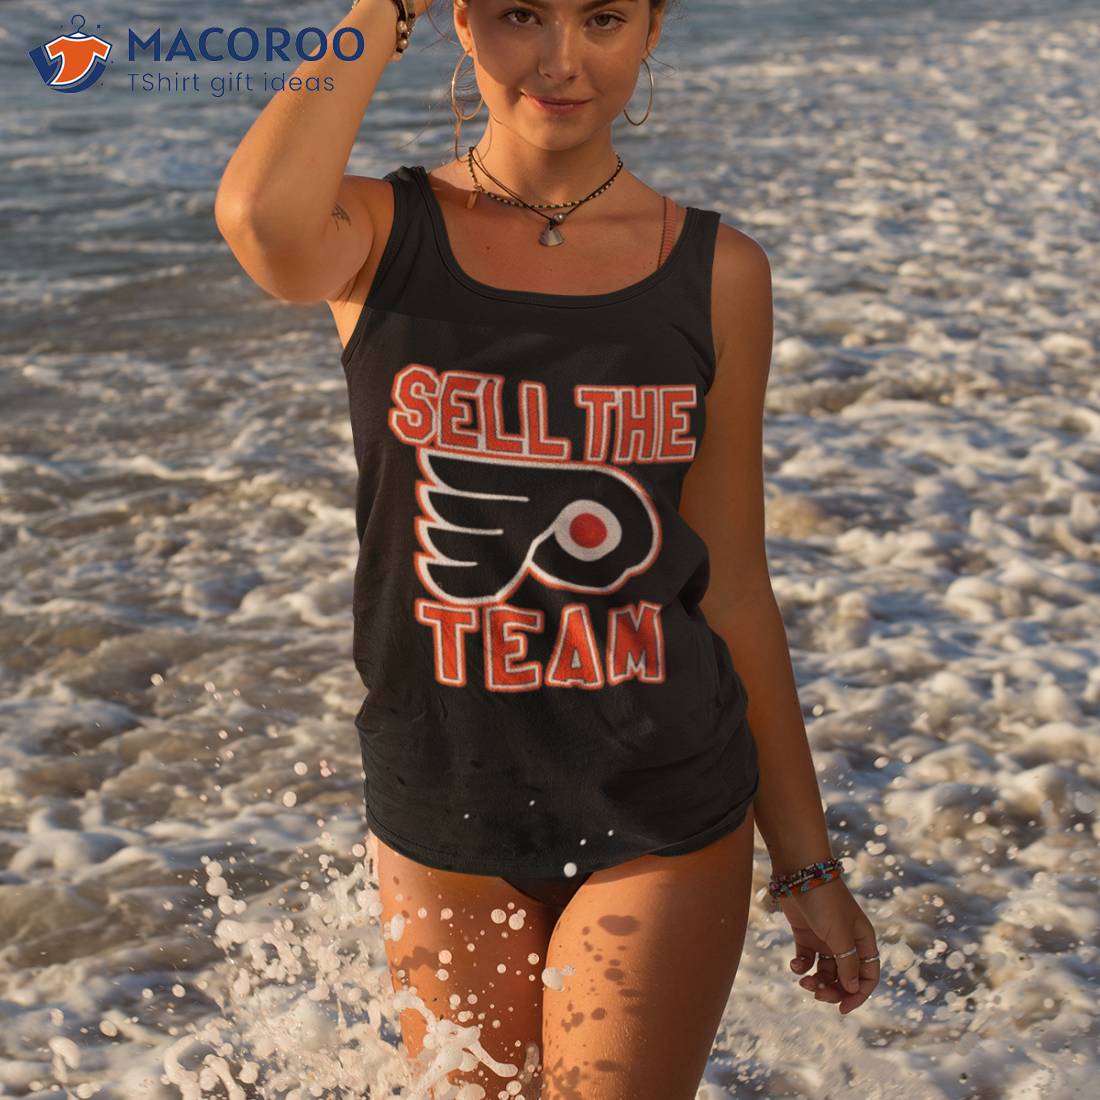 Philadelphia Flyers T-Shirts in Philadelphia Flyers Team Shop